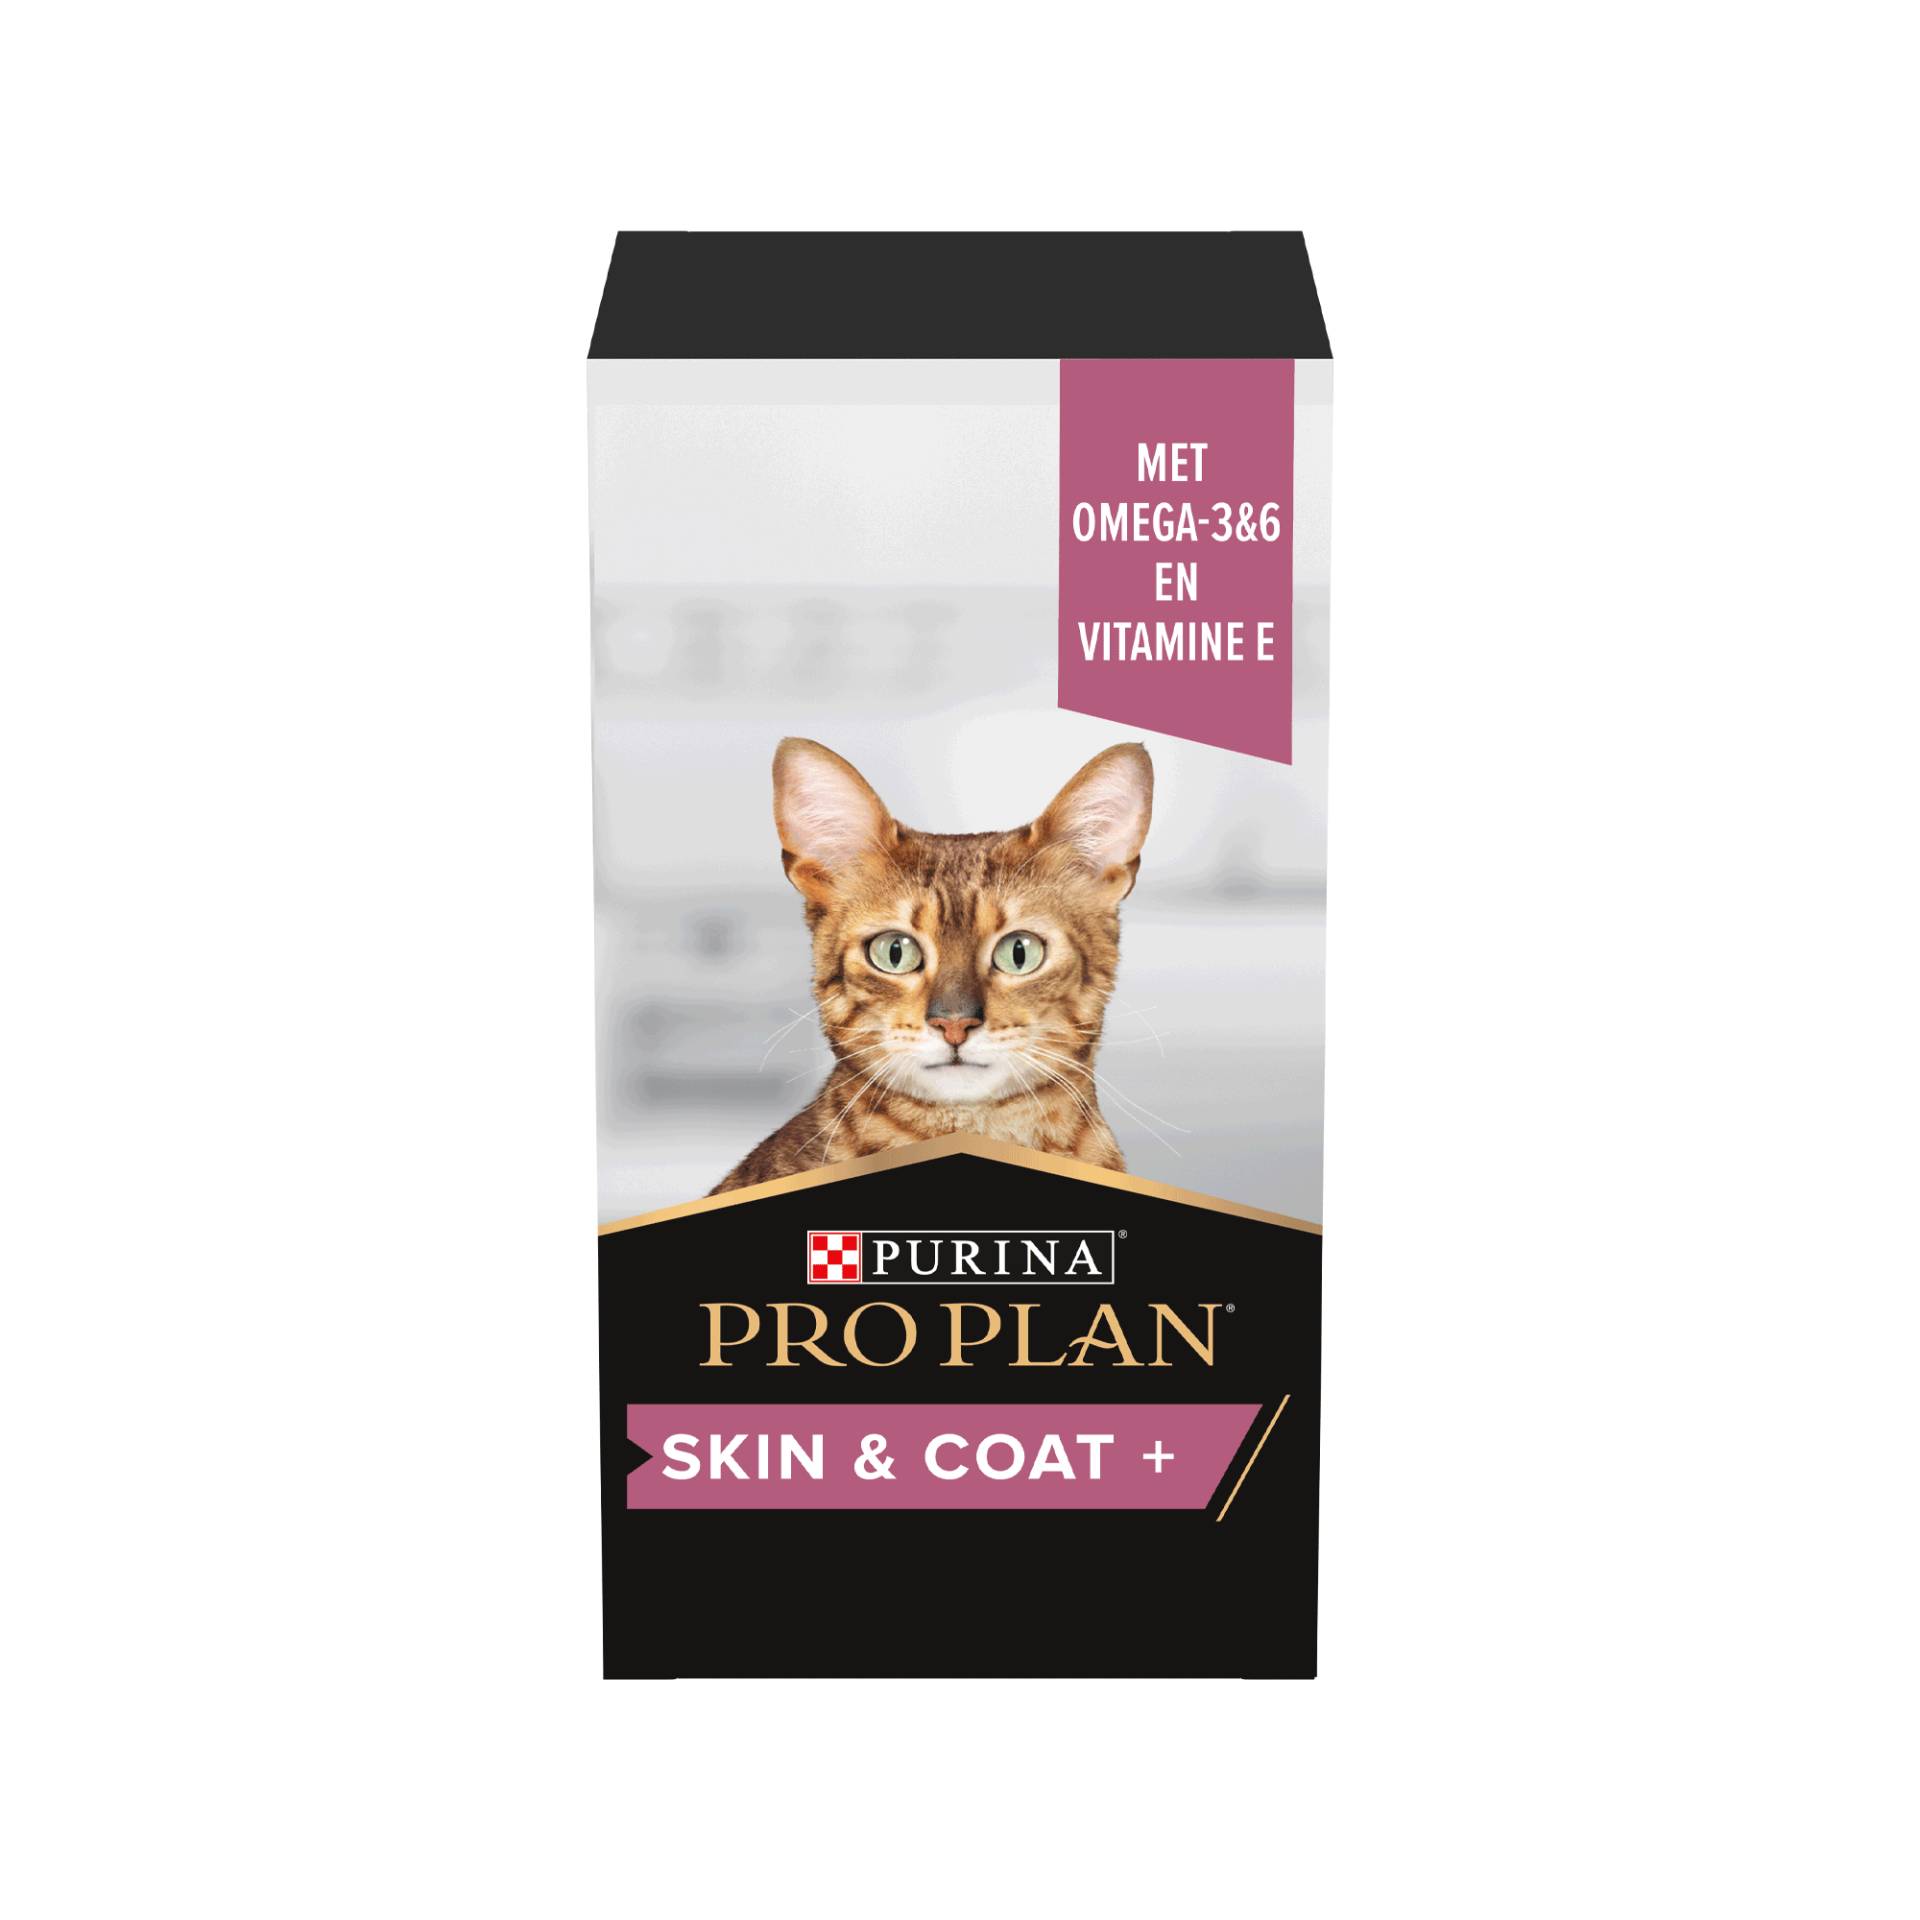 Purina Pro Plan Skin & Coat Katze Öl - 150 ml von Purina